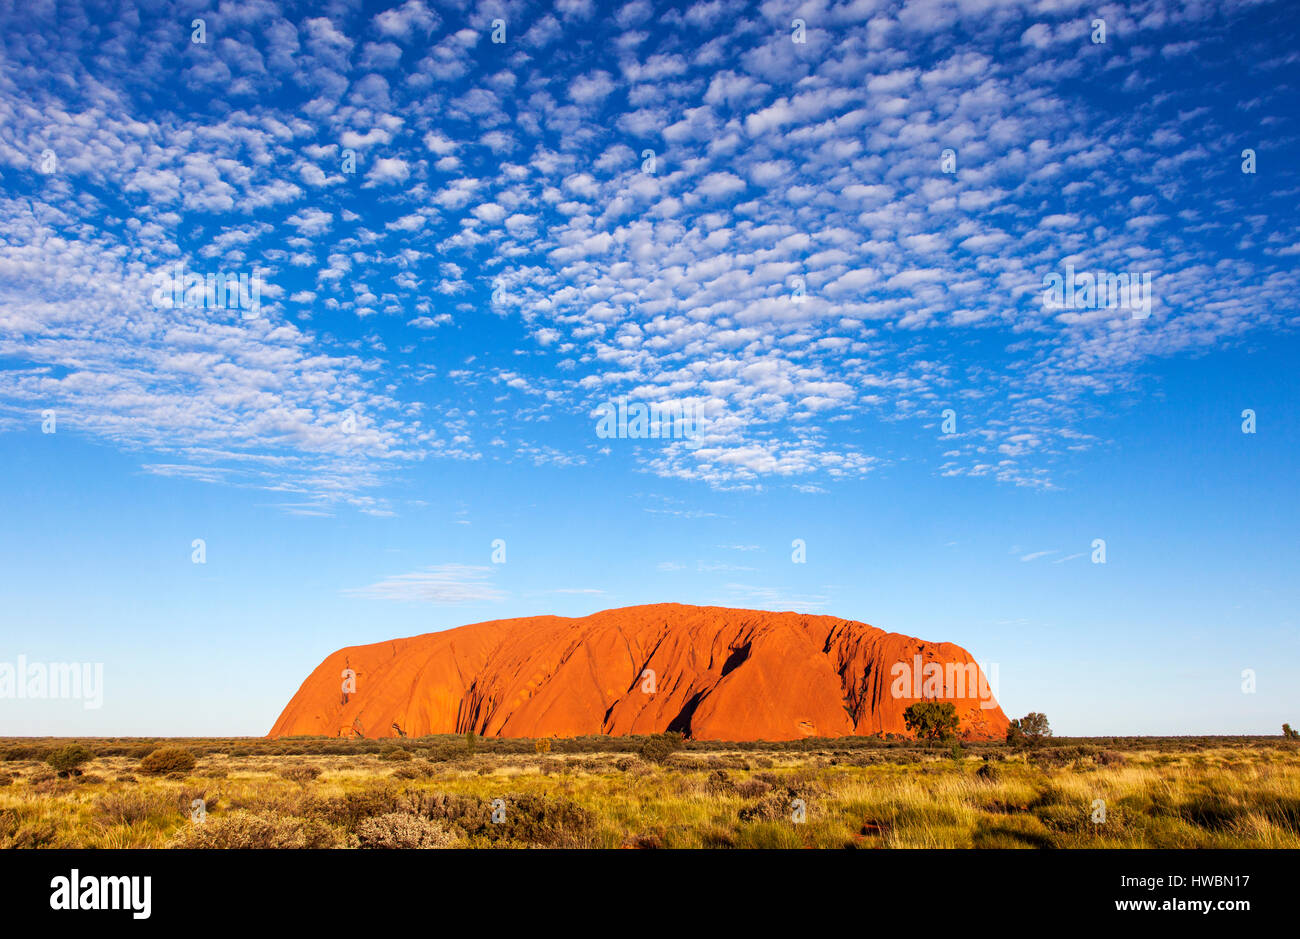 Ayers Rock or Uluru, Uluru-Kata Tjuta National Park, Northern Territory, Australia Stock Photo